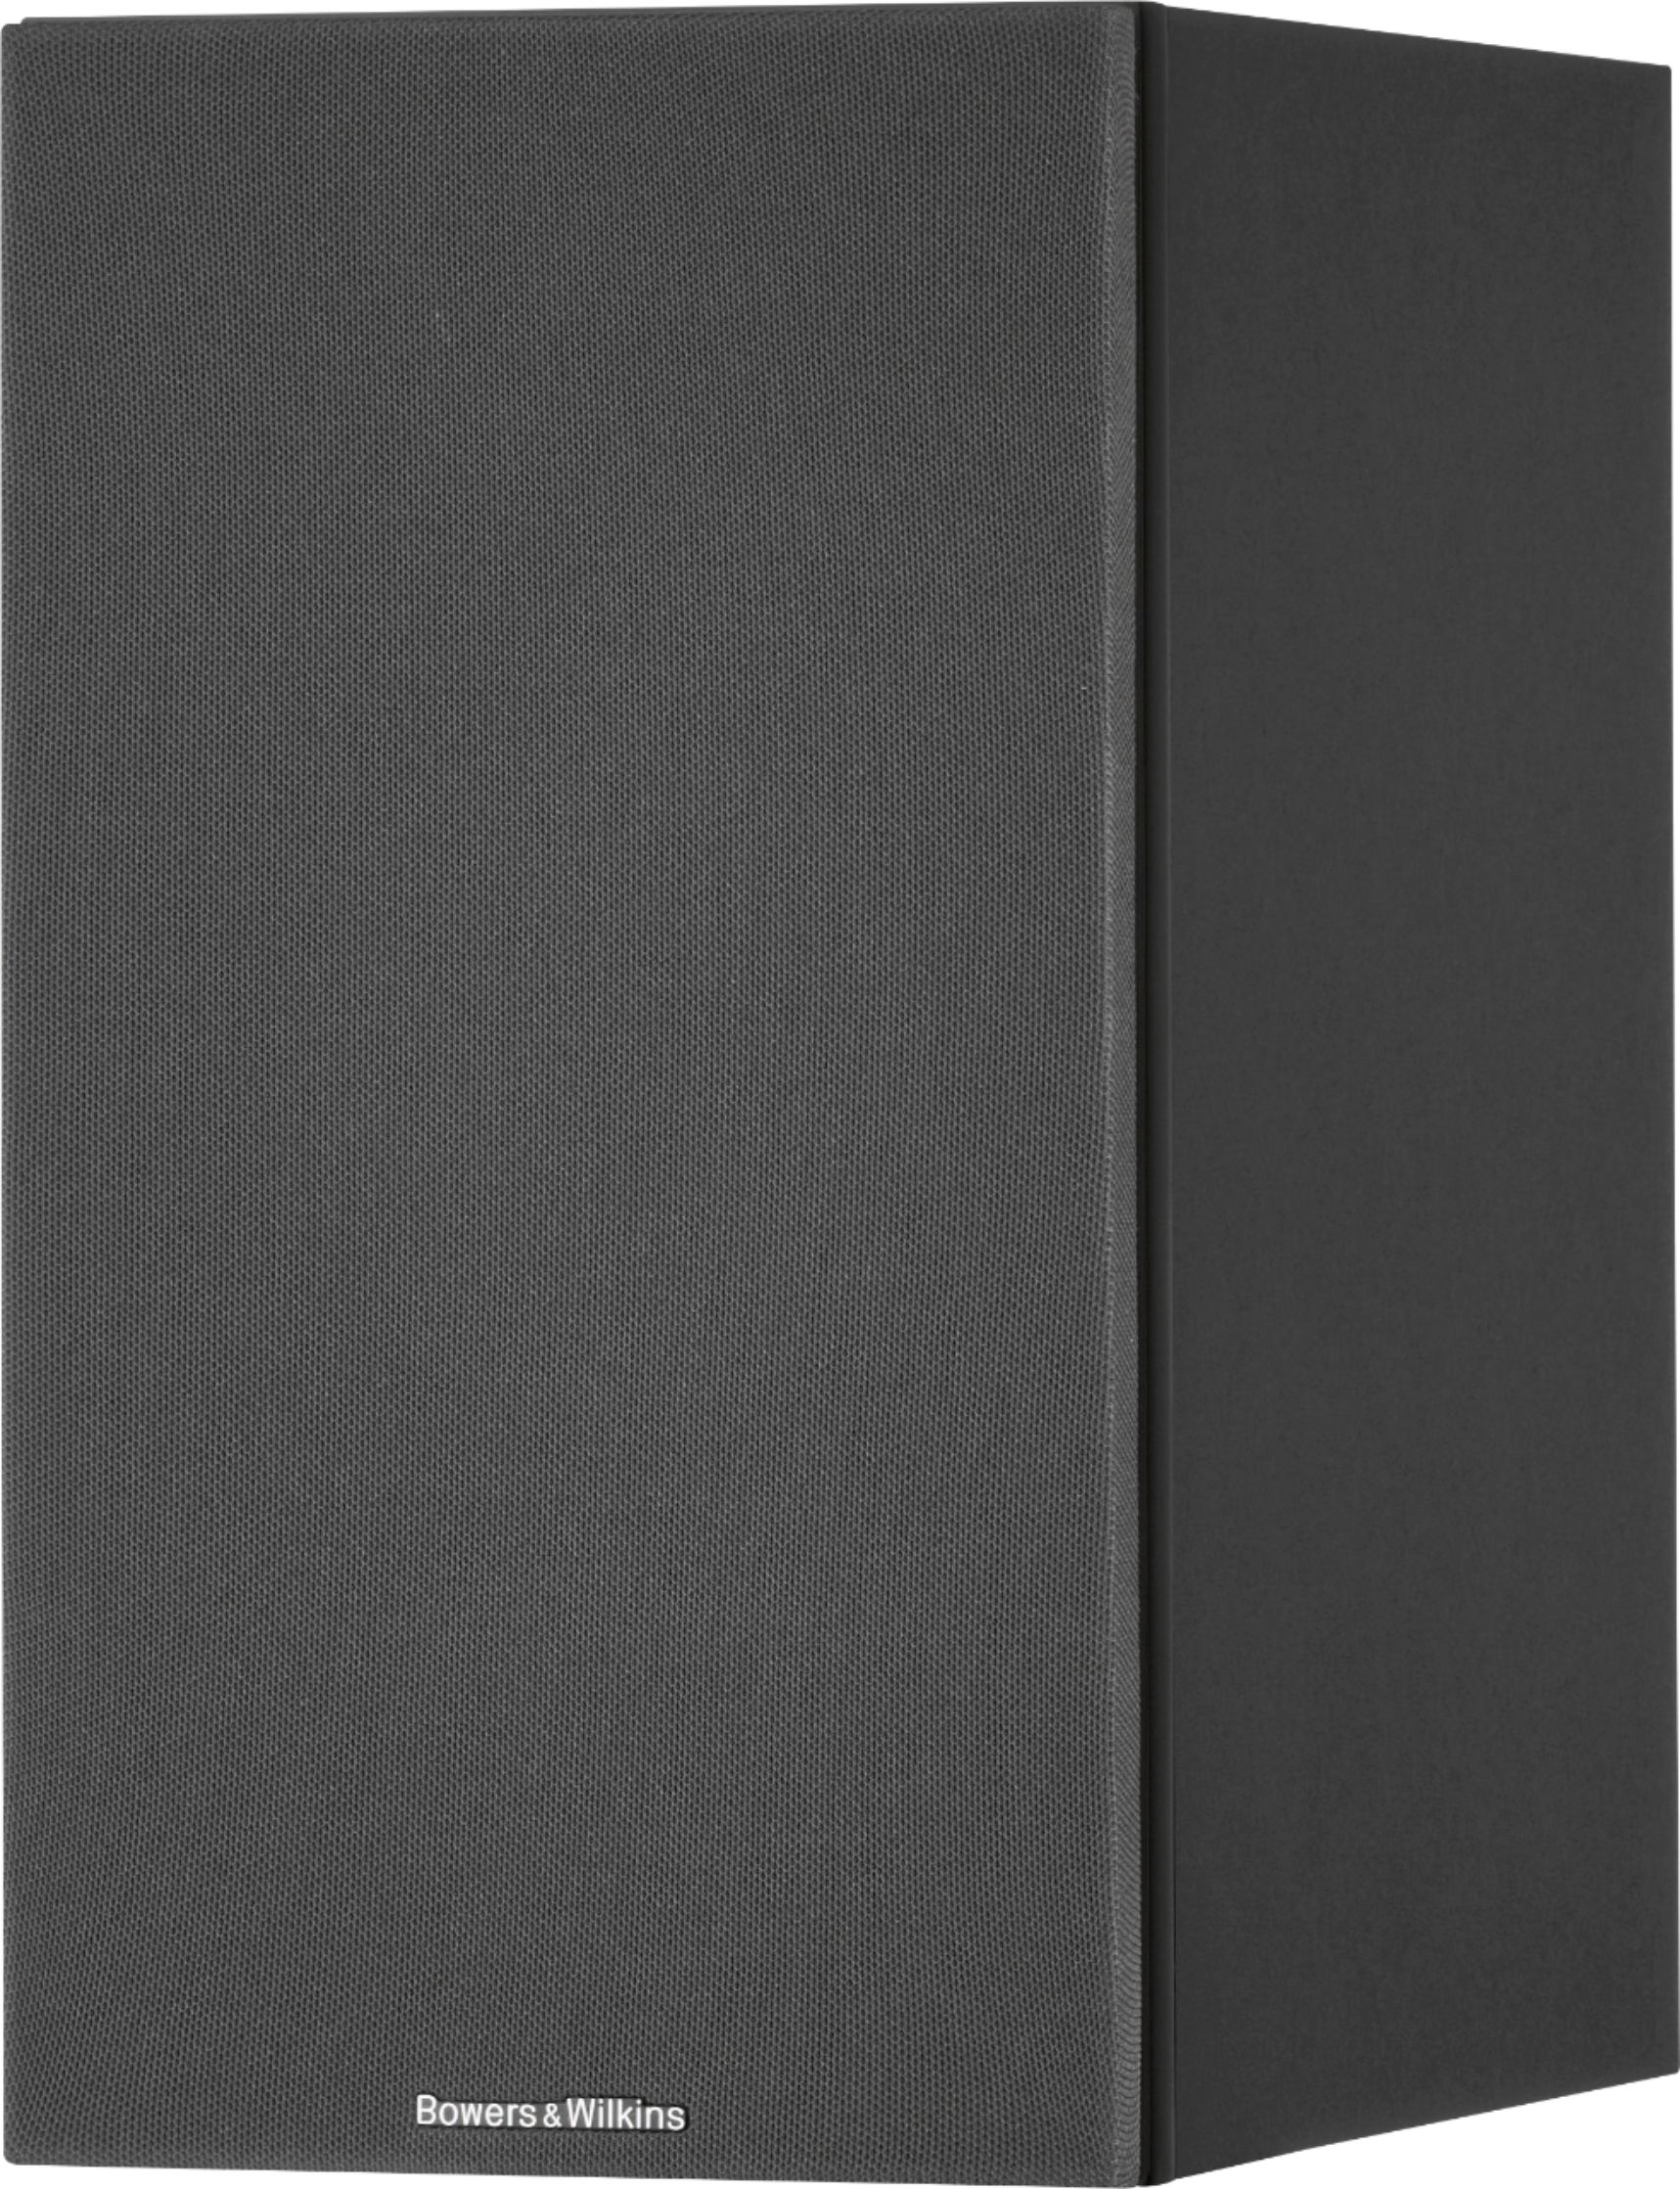 Left View: Bowers & Wilkins - 600 Series Anniversary Edition 2-way Bookshelf Speaker w/6.5" midbass (pair) - Black